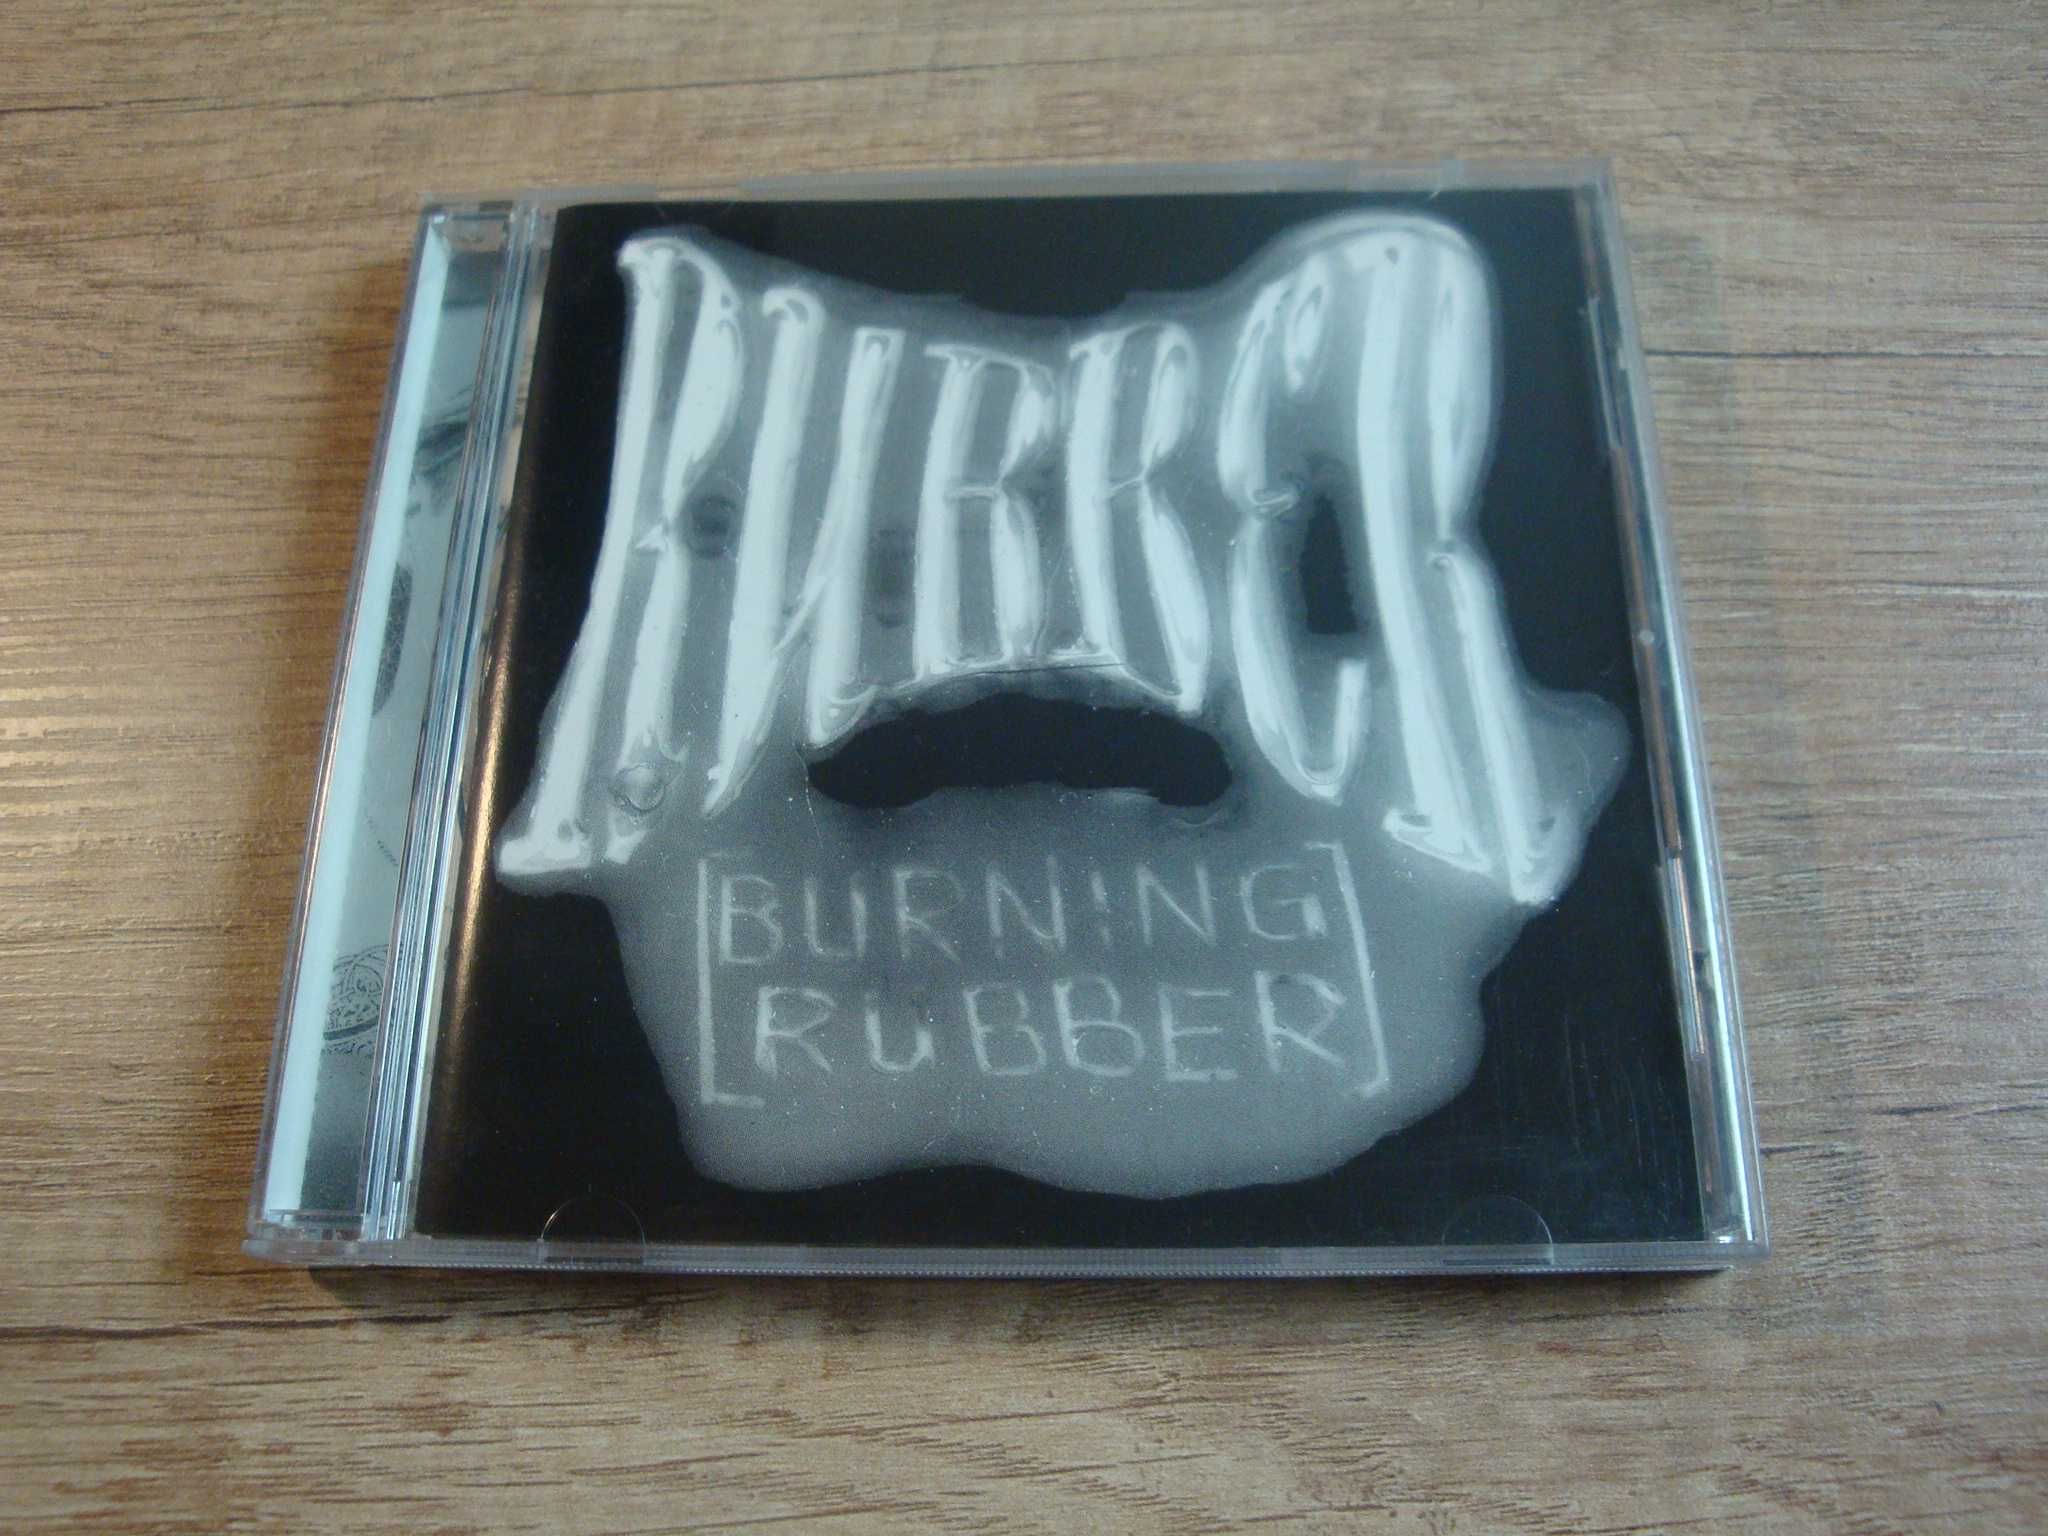 Rubber - Burning Rubber (Alternative Rock)